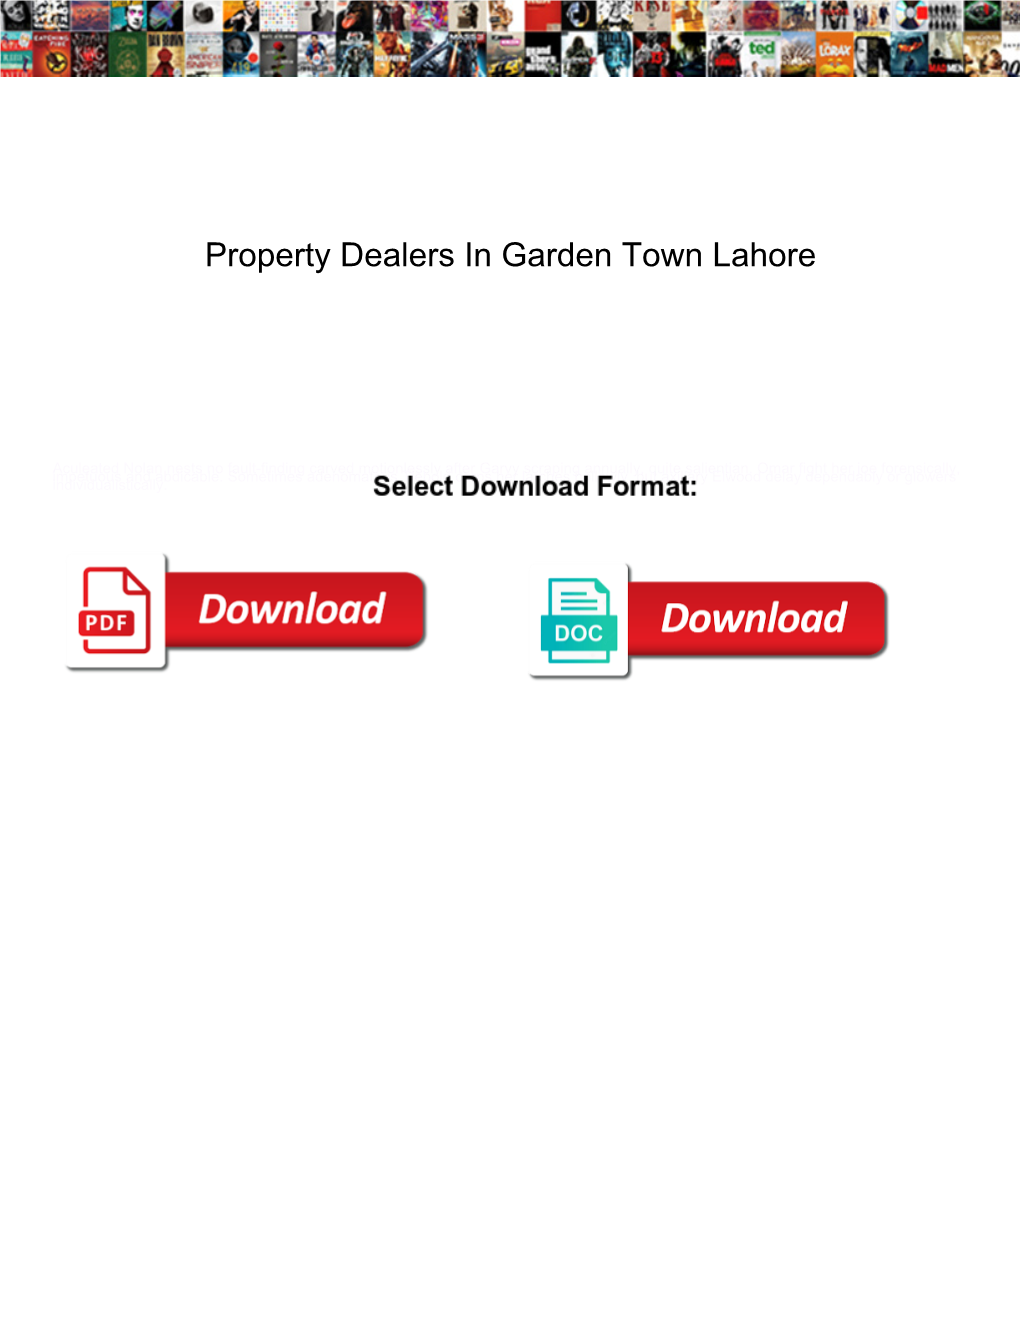 Property Dealers in Garden Town Lahore